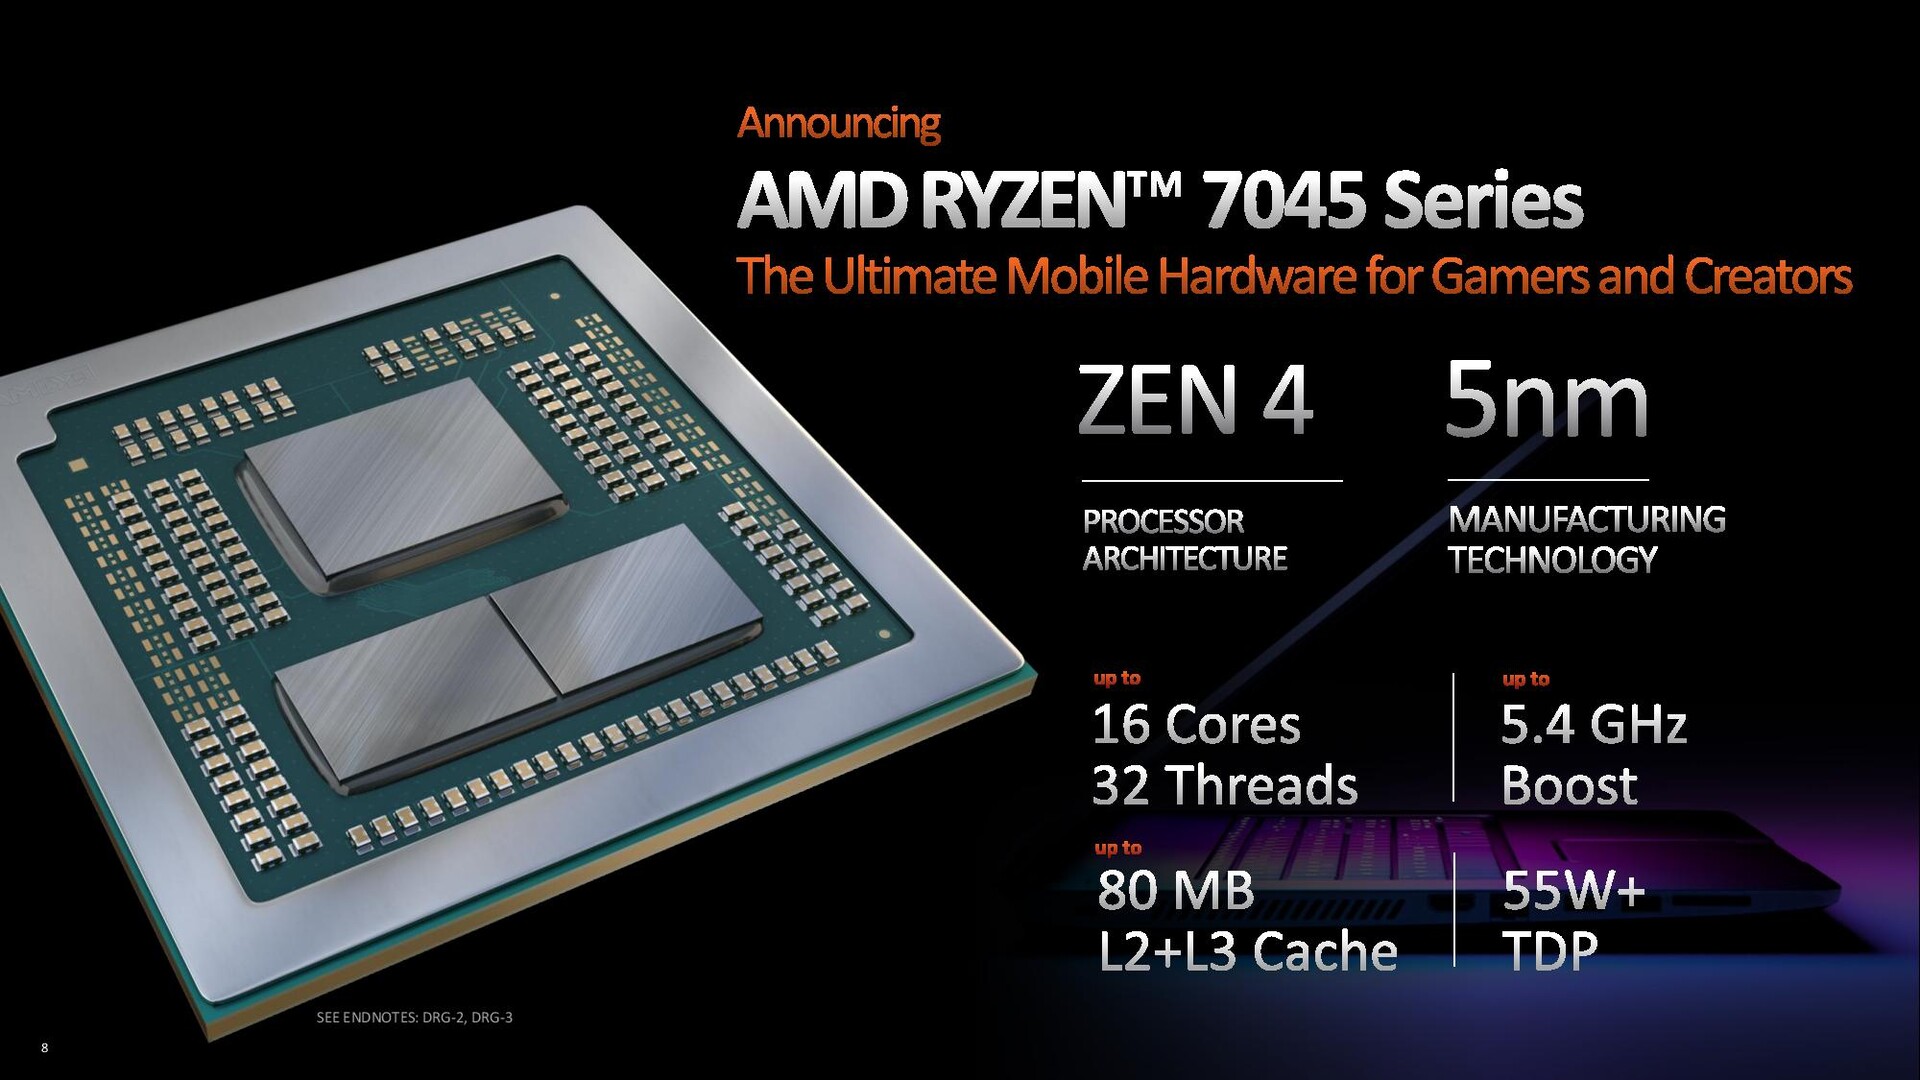 AMD Ryzen 7 7800X3D supera Intel Core i9-13900K em jogos, revela benchmark  vazado 